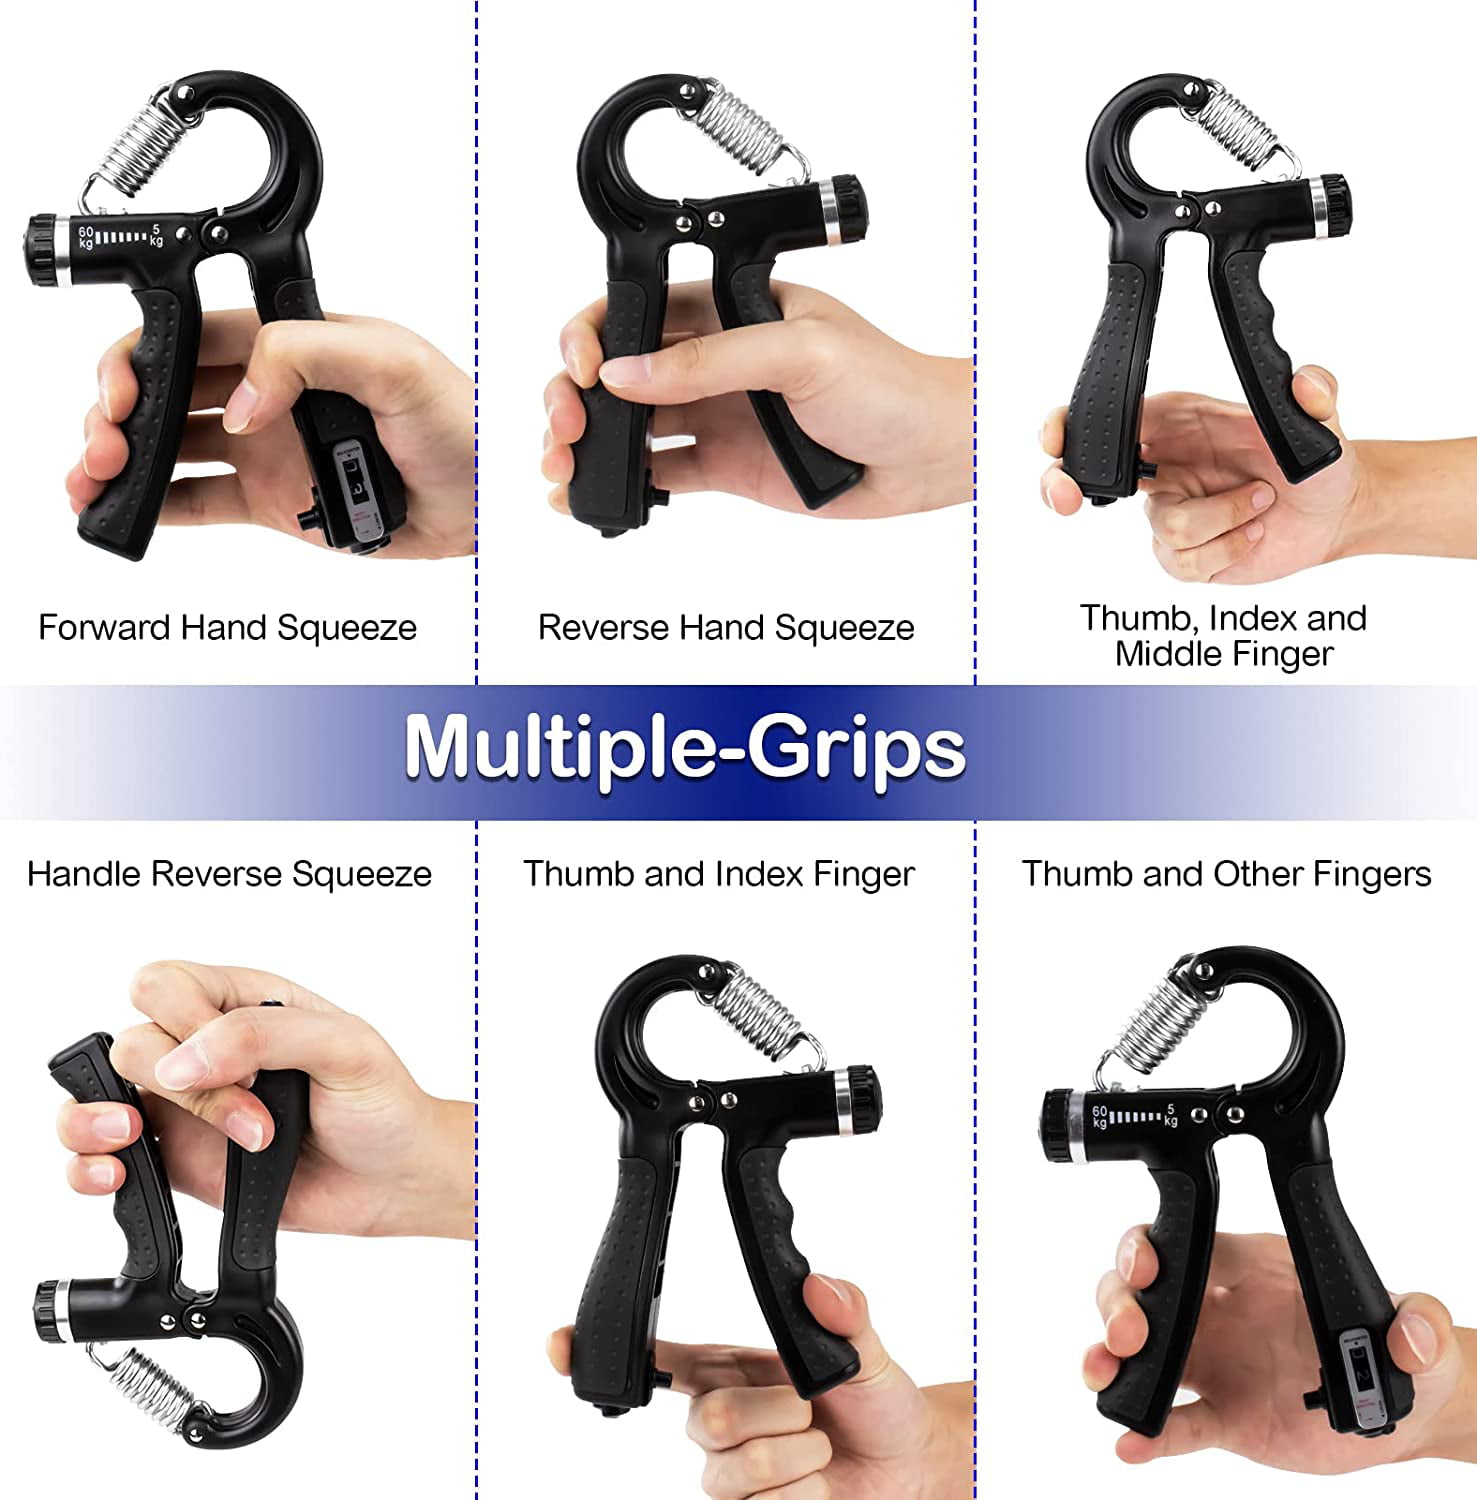 1pc Durable Grip Strengthener & Grip Enhancer - Anti-slip Wrist